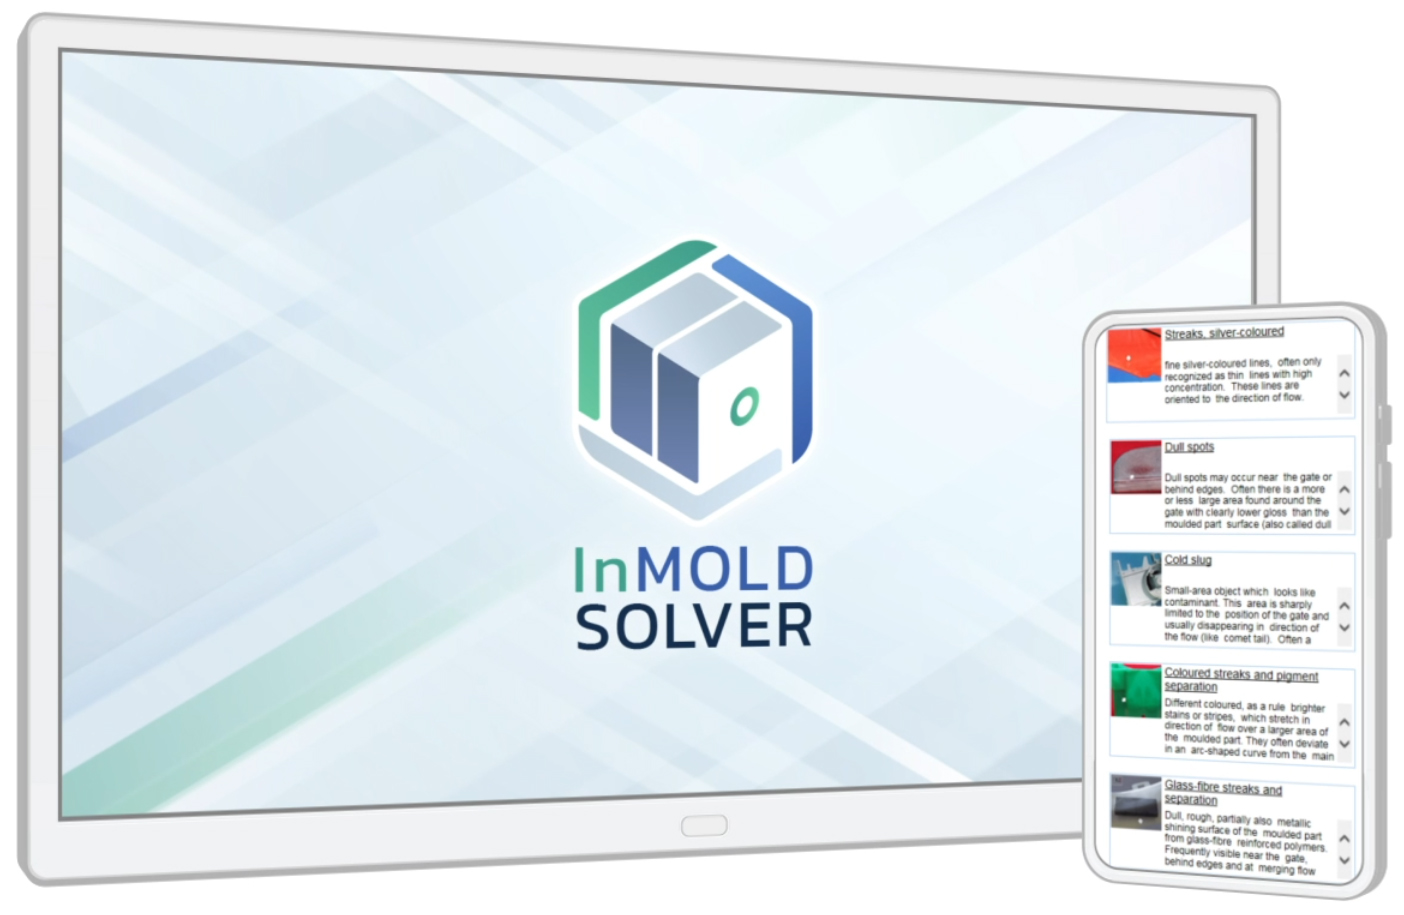 InMold Solver in Plastic Industry